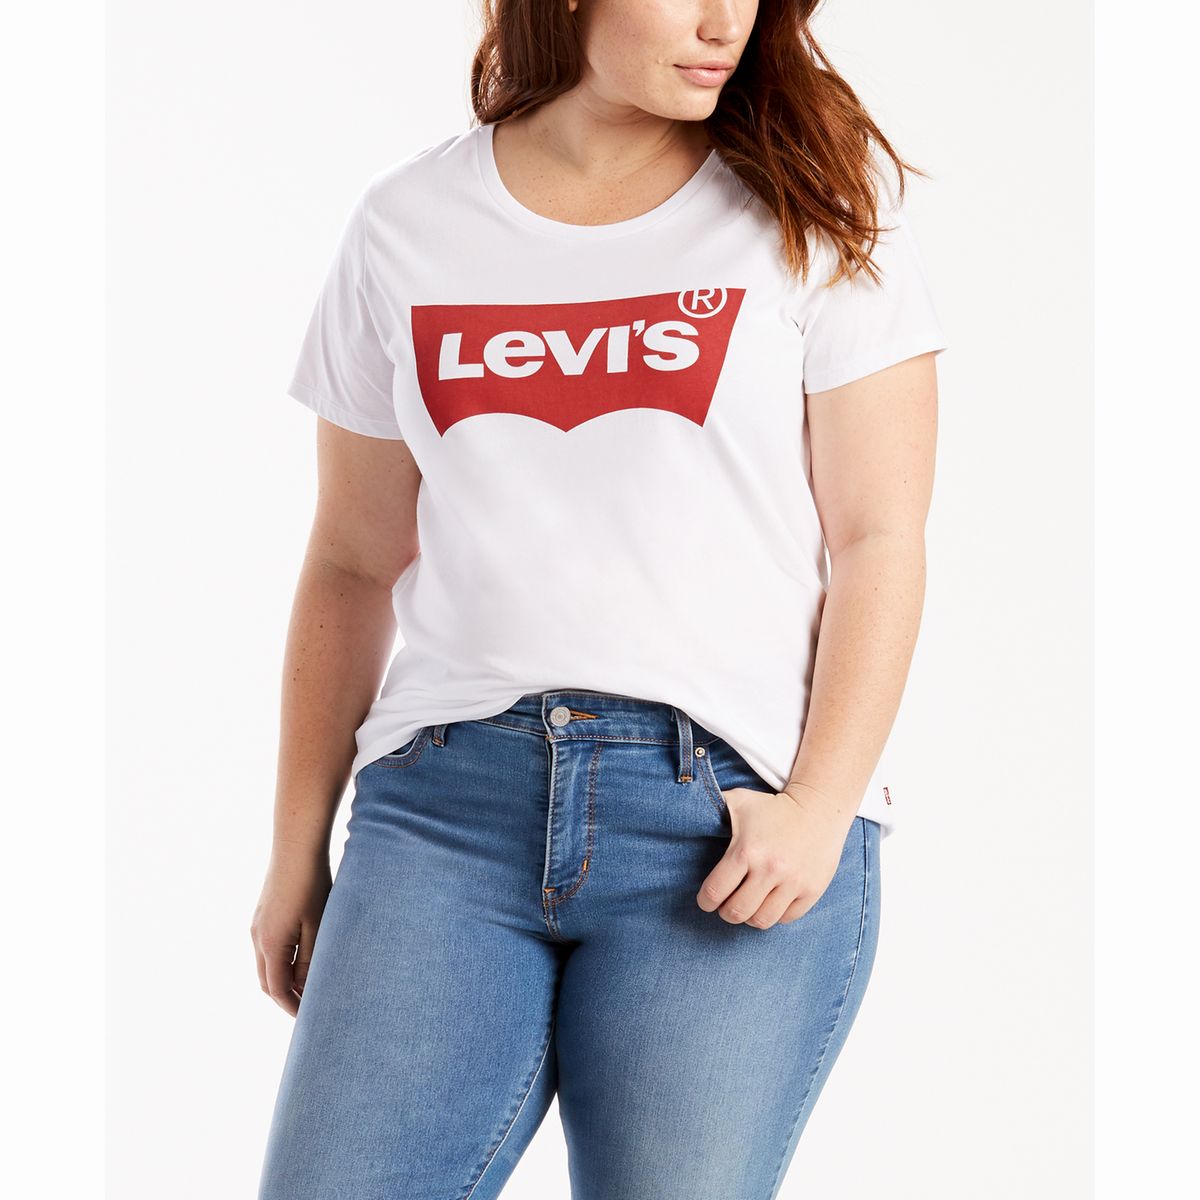 Tshirt logo LEVIS PLUS THE PERFECT TEE  LEVI'S image 0